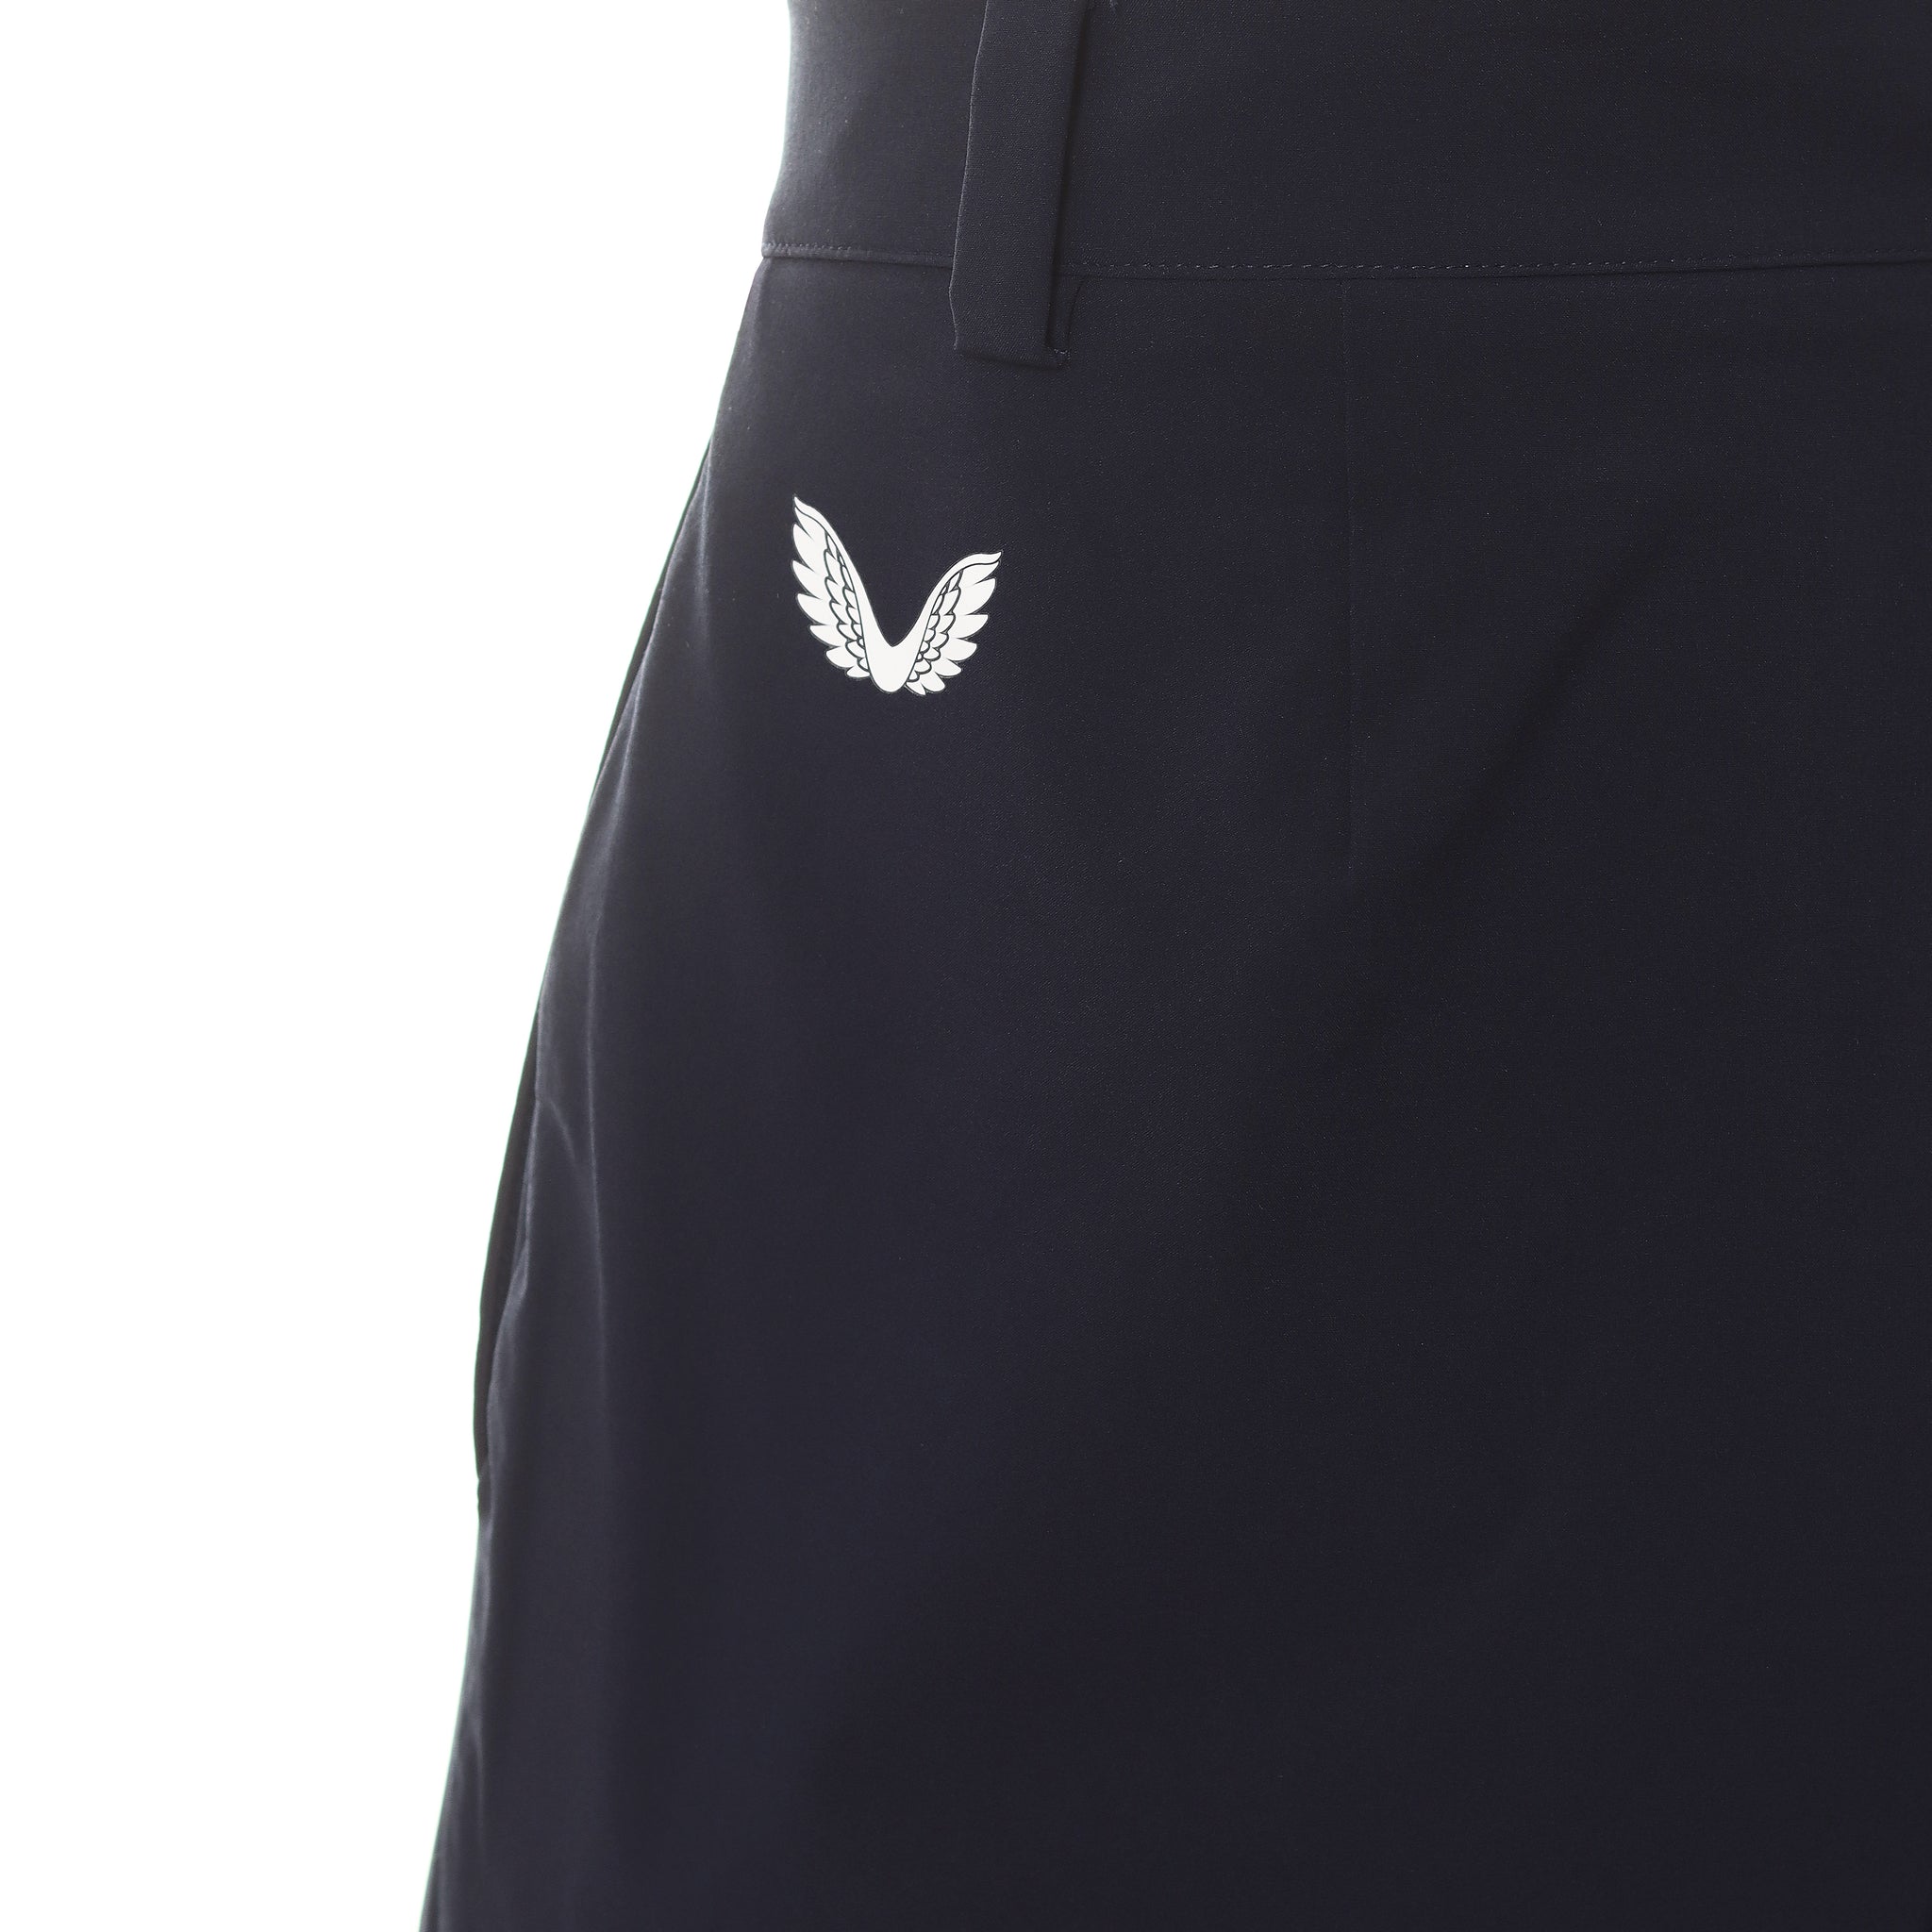 castore-essential-golf-shorts-cma20319-midnight-navy